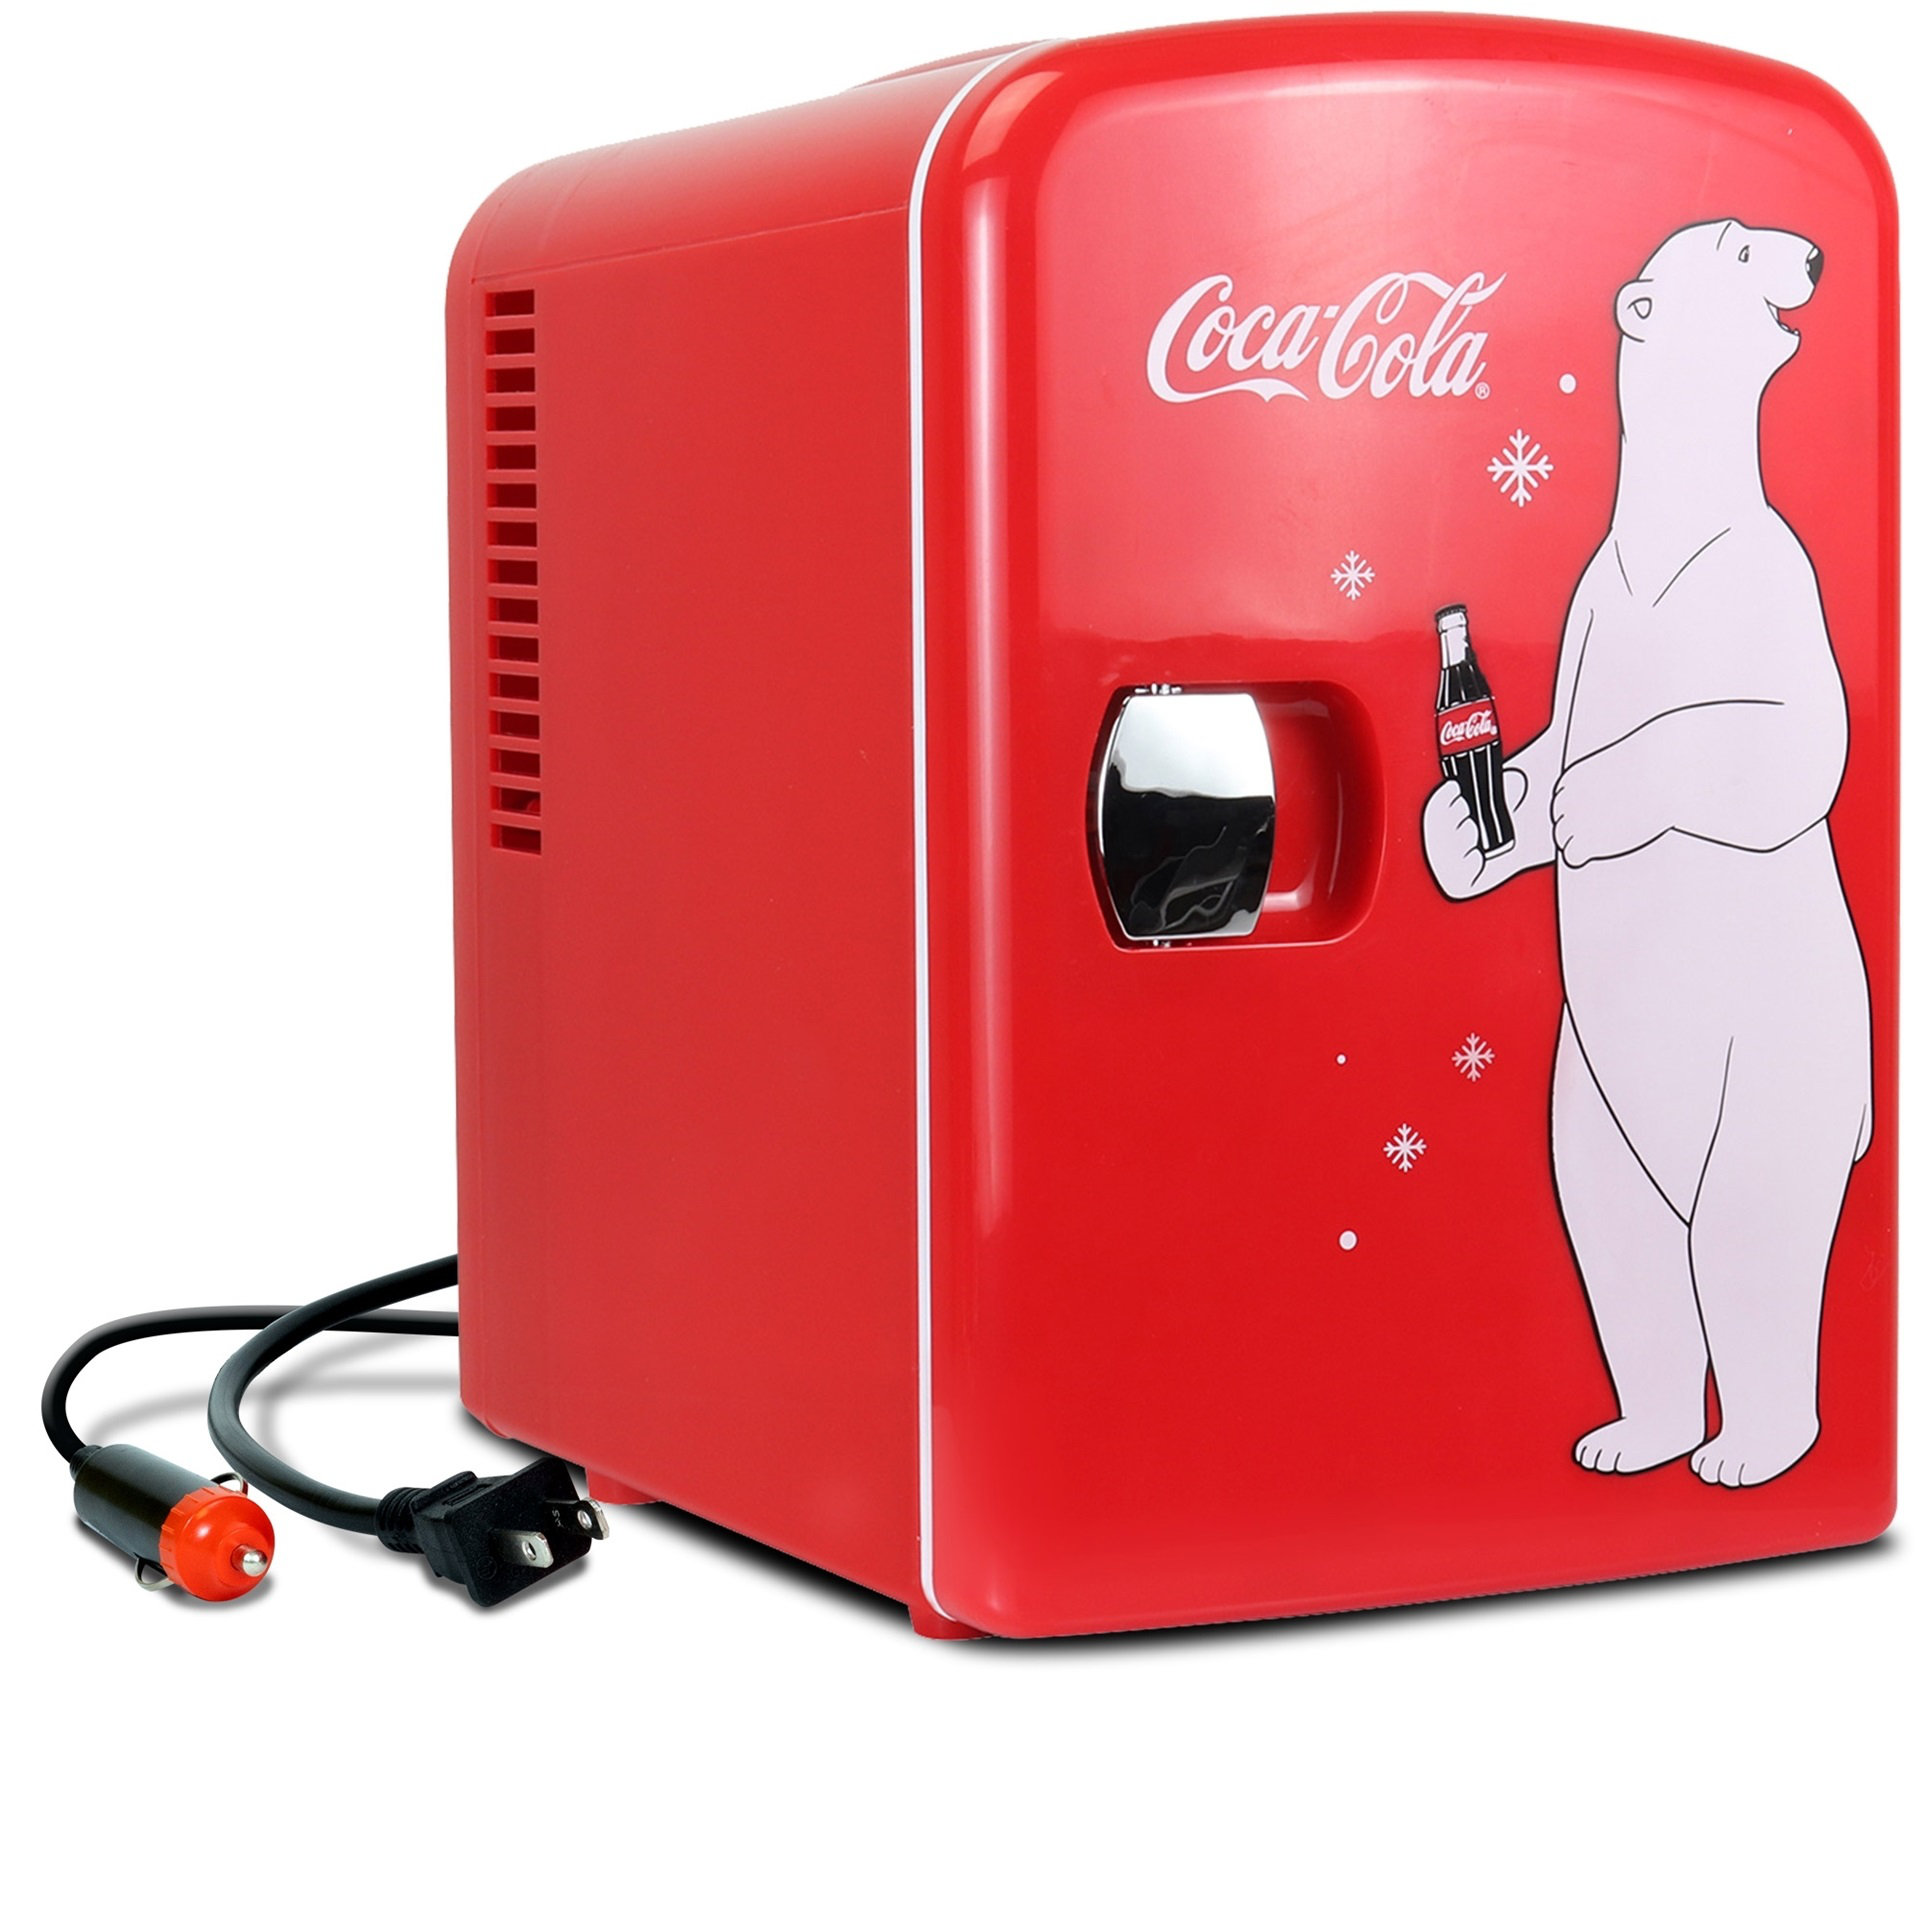 USB Mini Refrigerator 12V Electric Drink Cooler Kettle Drink Quick Cooling  Cup